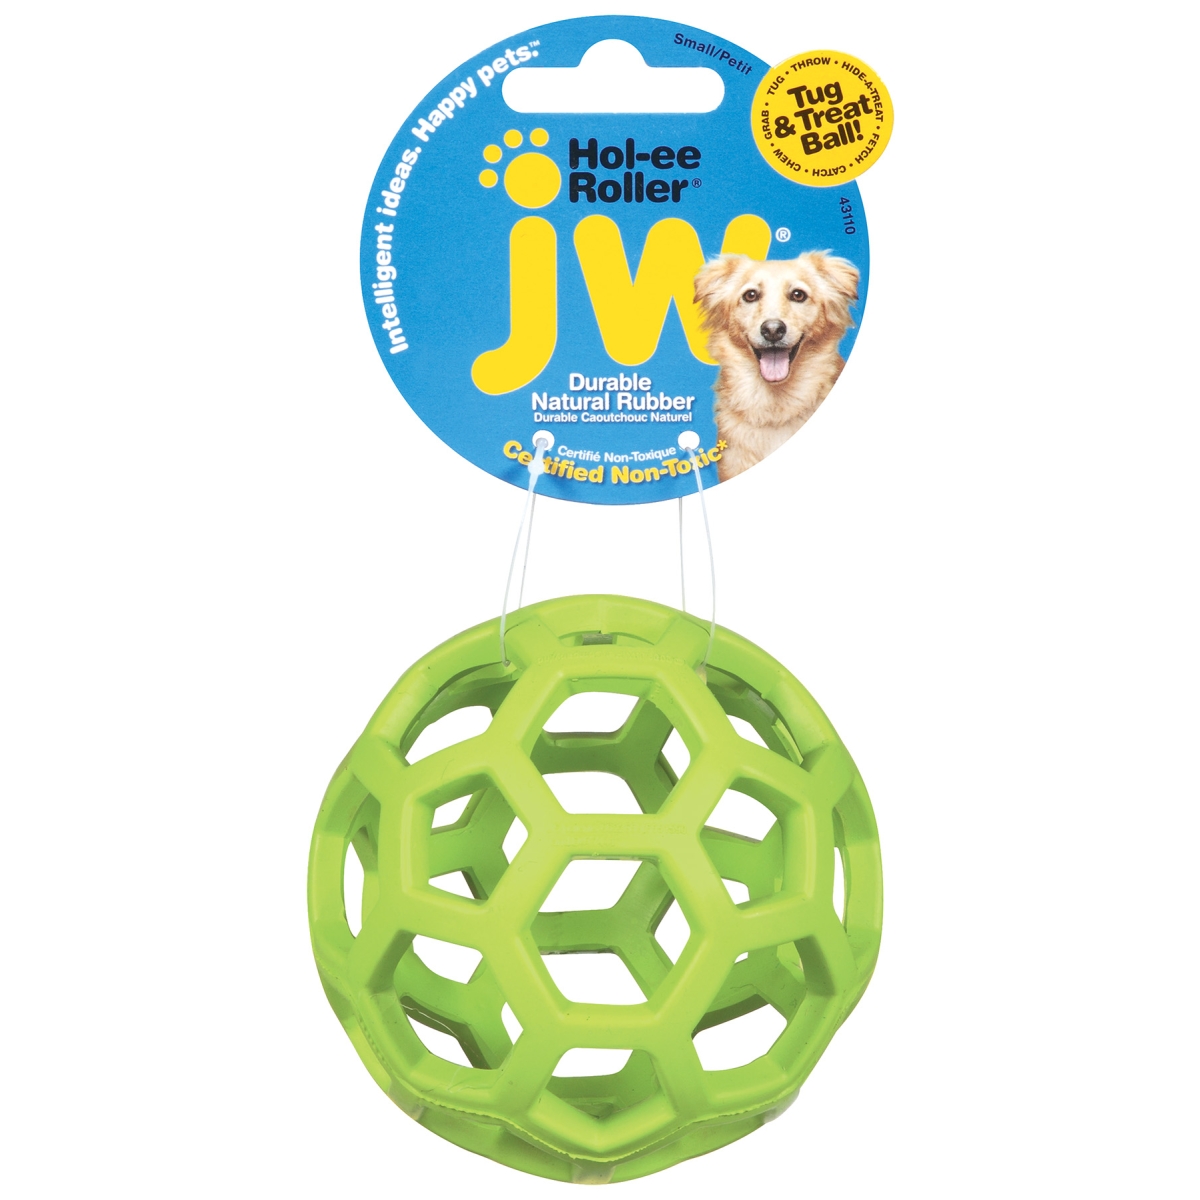 JW Hol-ee Roller мяч с дырами для собак, S